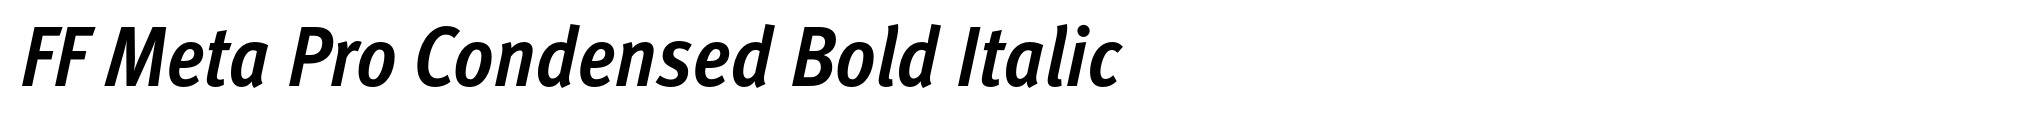 FF Meta Pro Condensed Bold Italic image